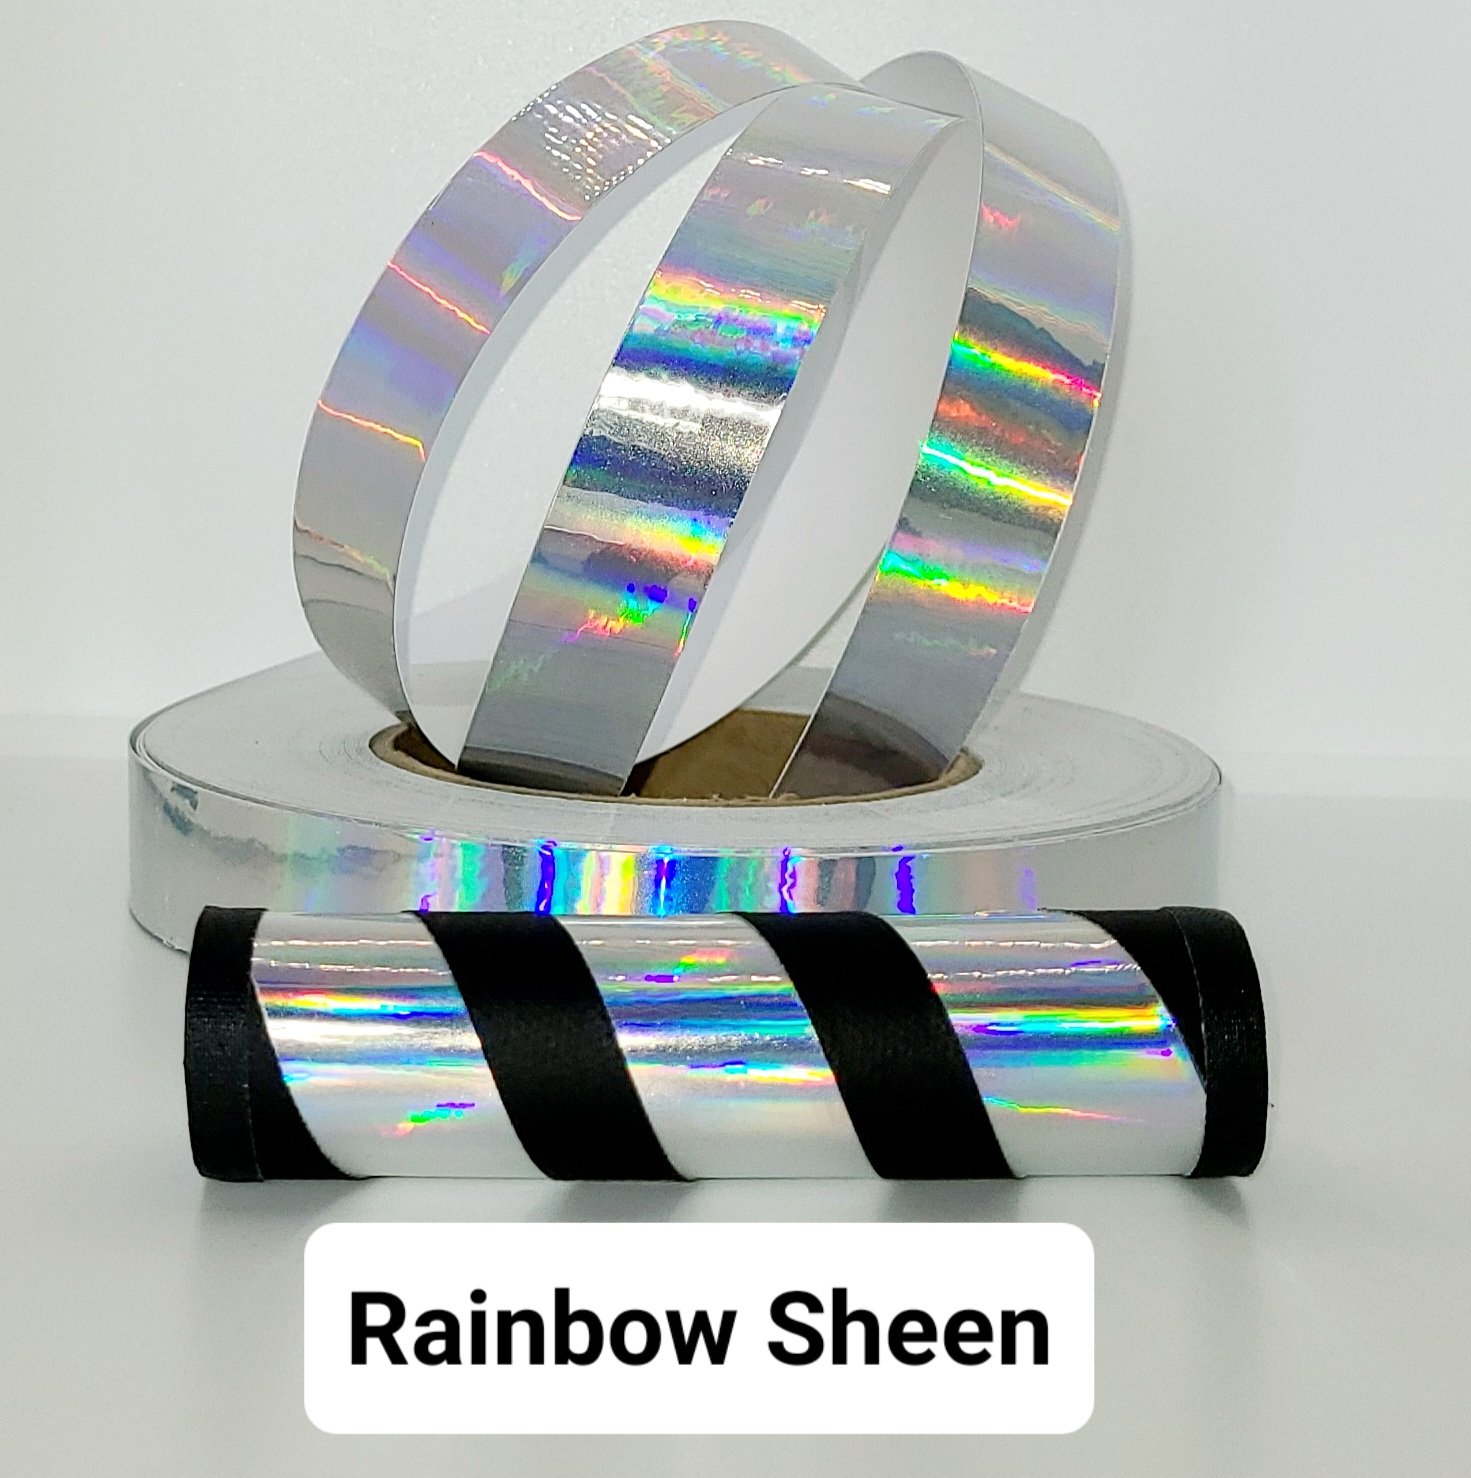 Rainbow Sheen